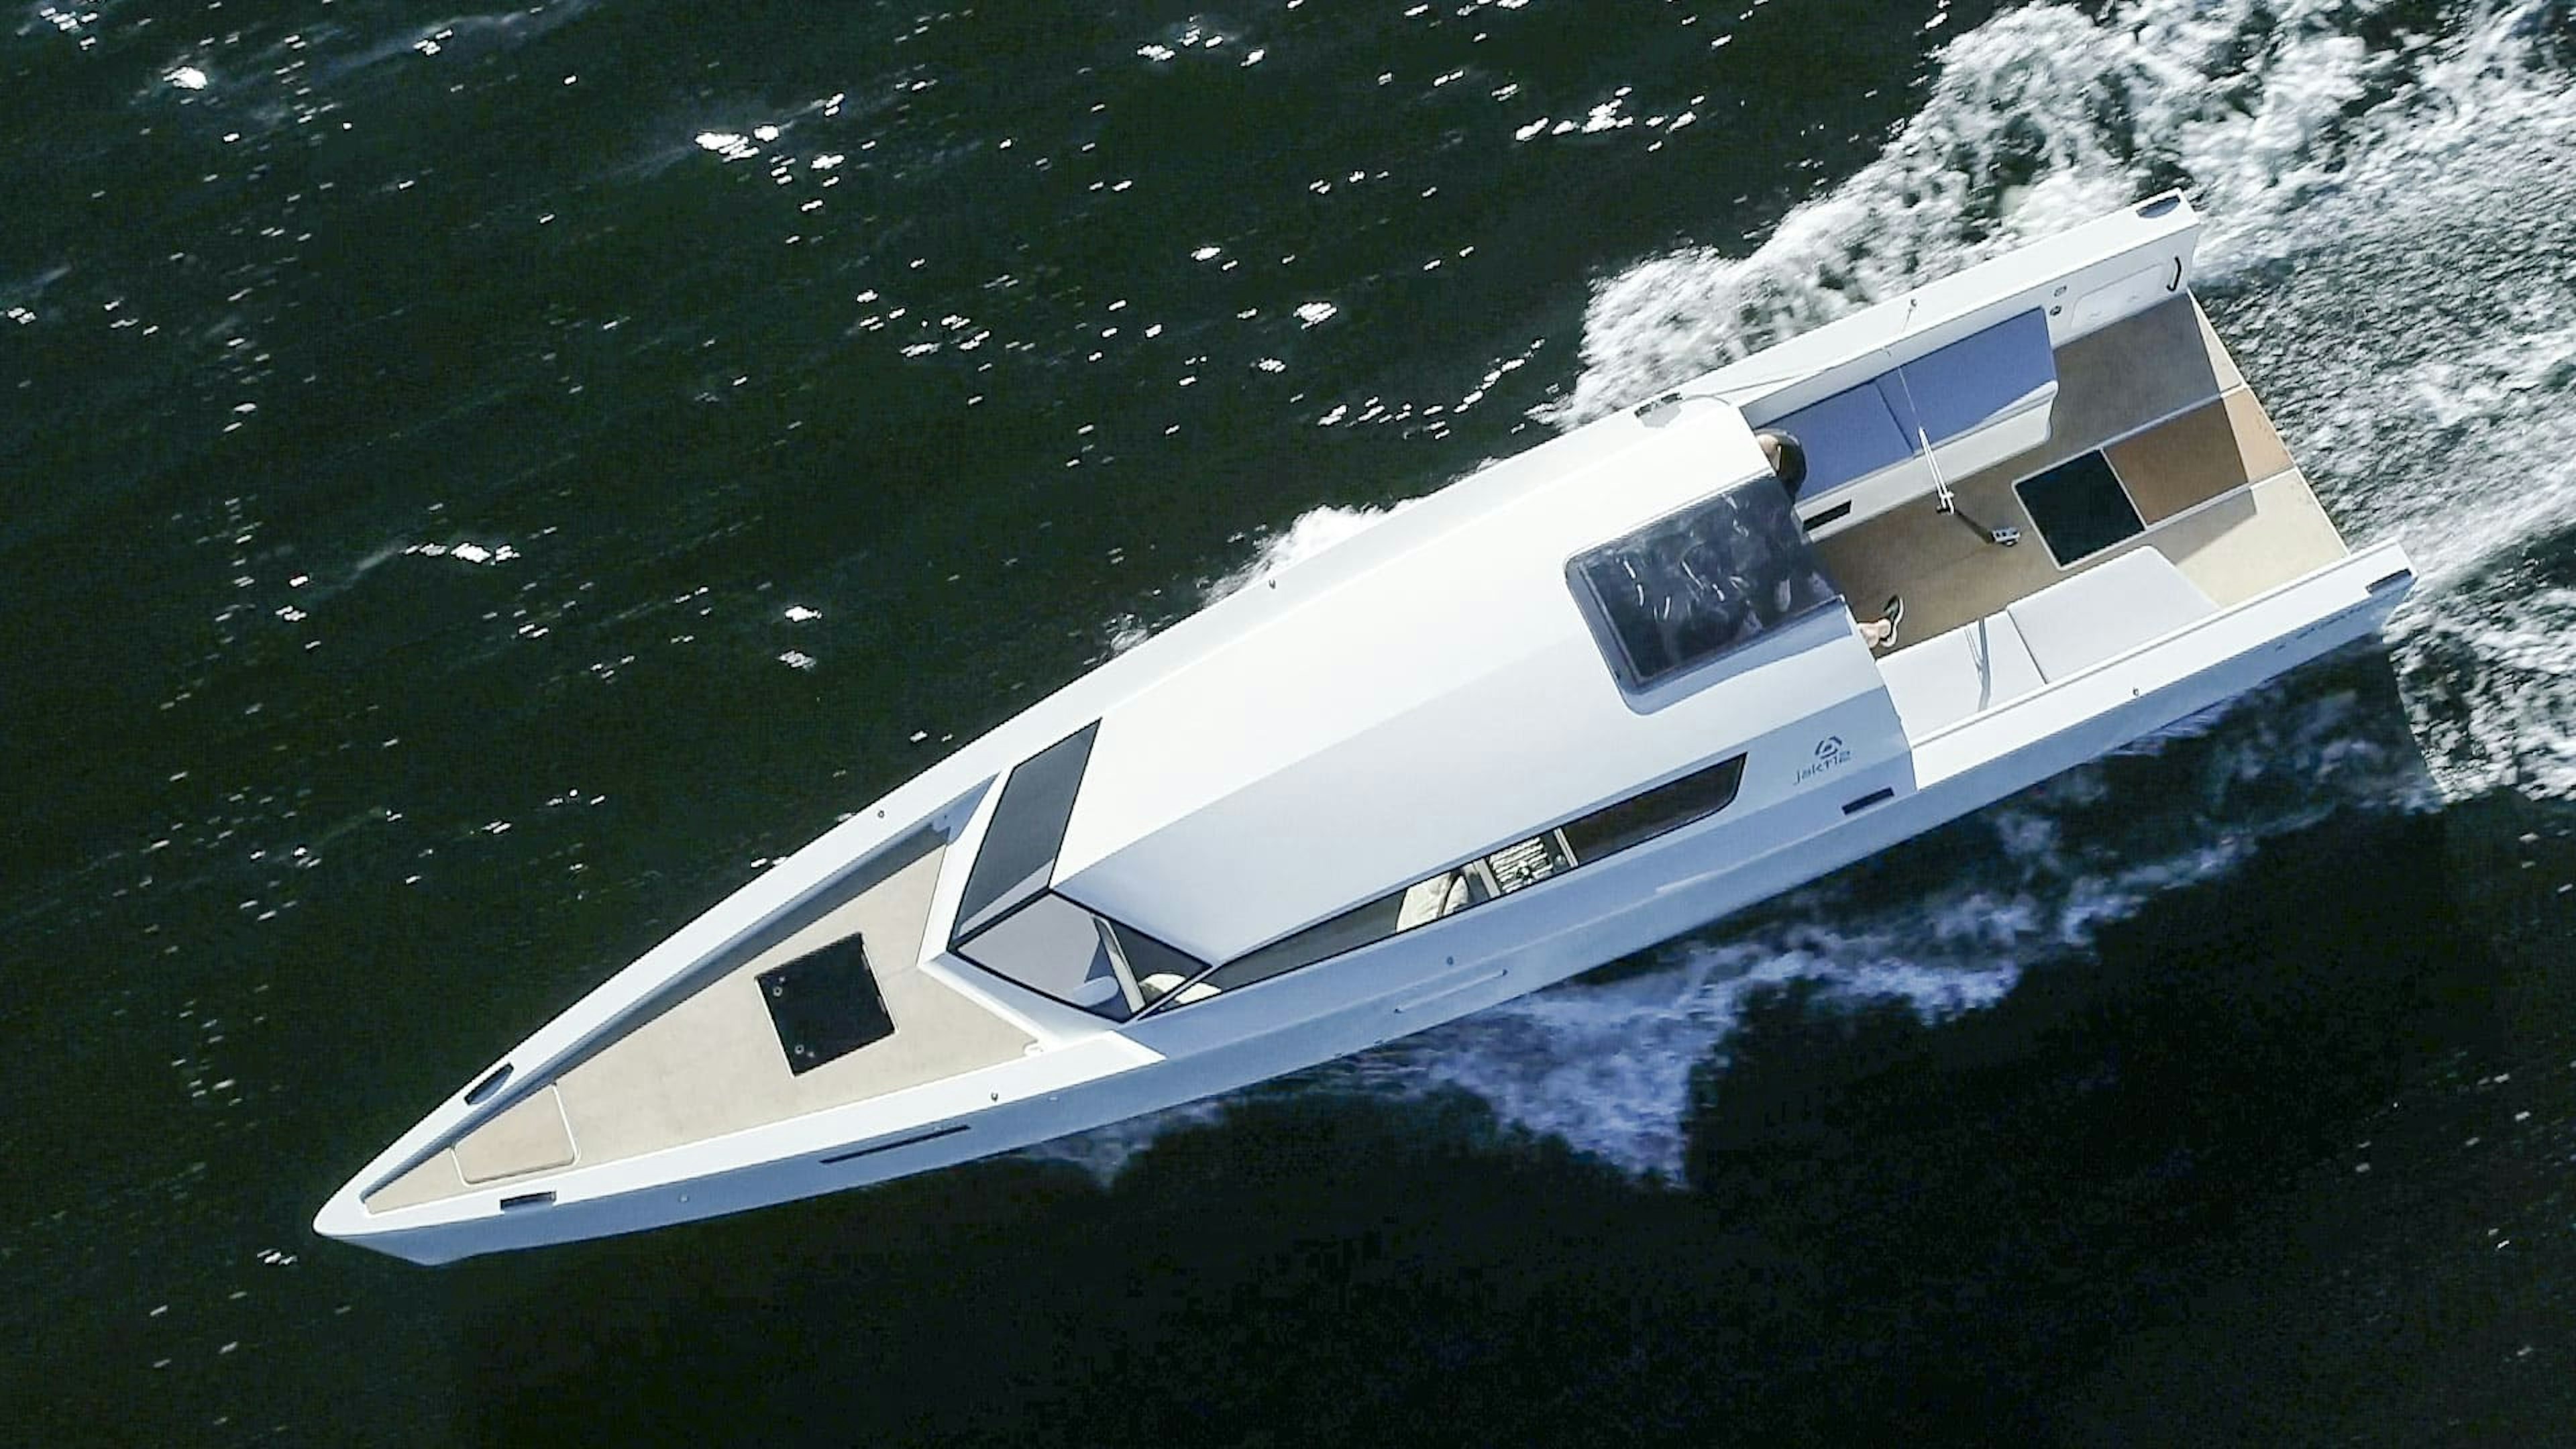 Hamnen.se testar den energieffektiva båten Jakt 12.